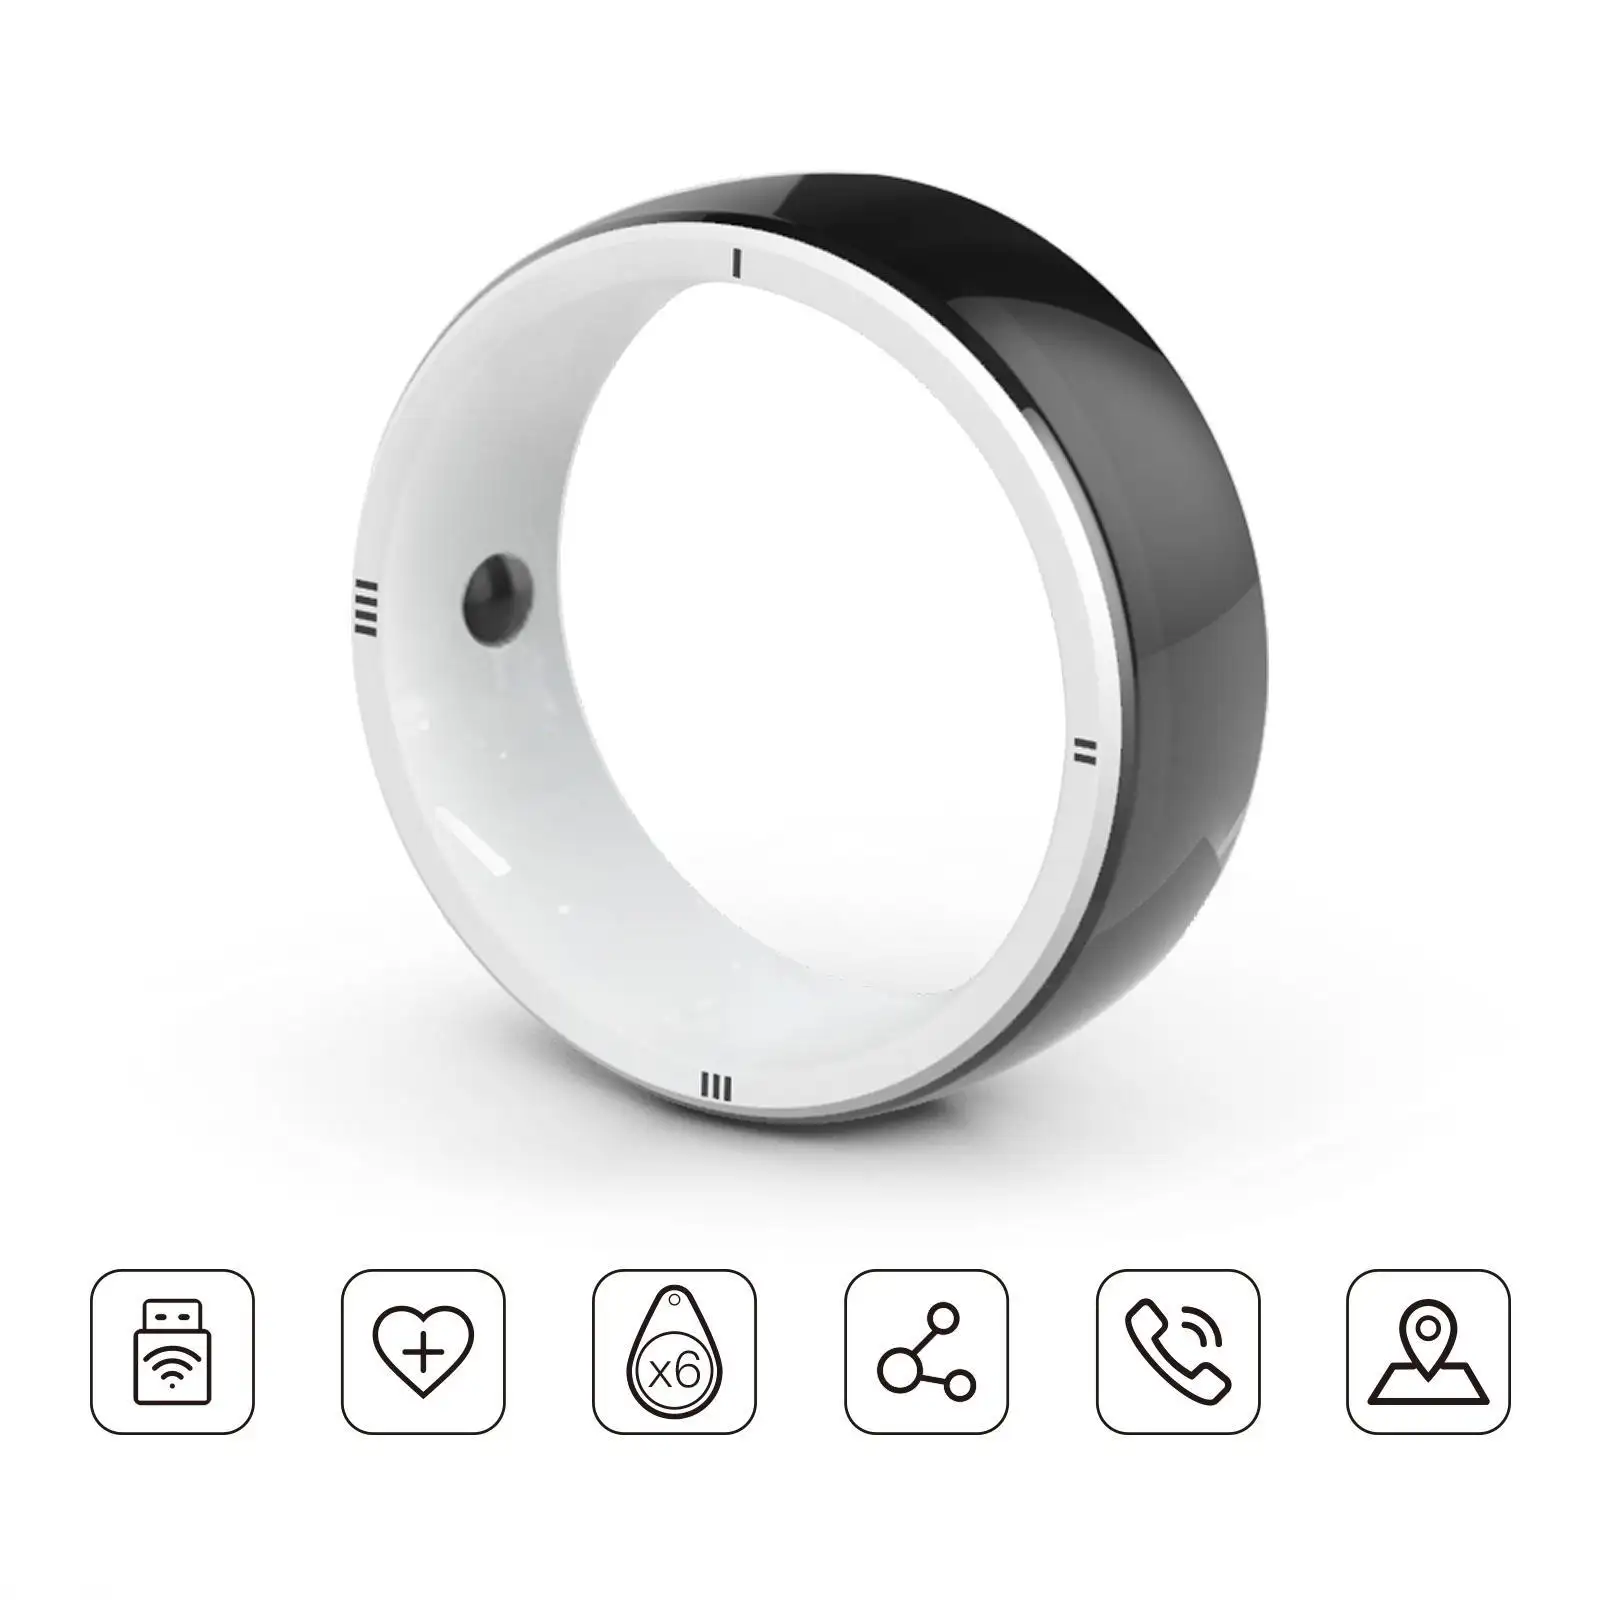 JAKCOM R5 Smart Ring neues Smart Ring Produkt als High-End-Verstärker-Cliphalter x Angebote Amino-Kabel bestes Homekit 2 Schenkel